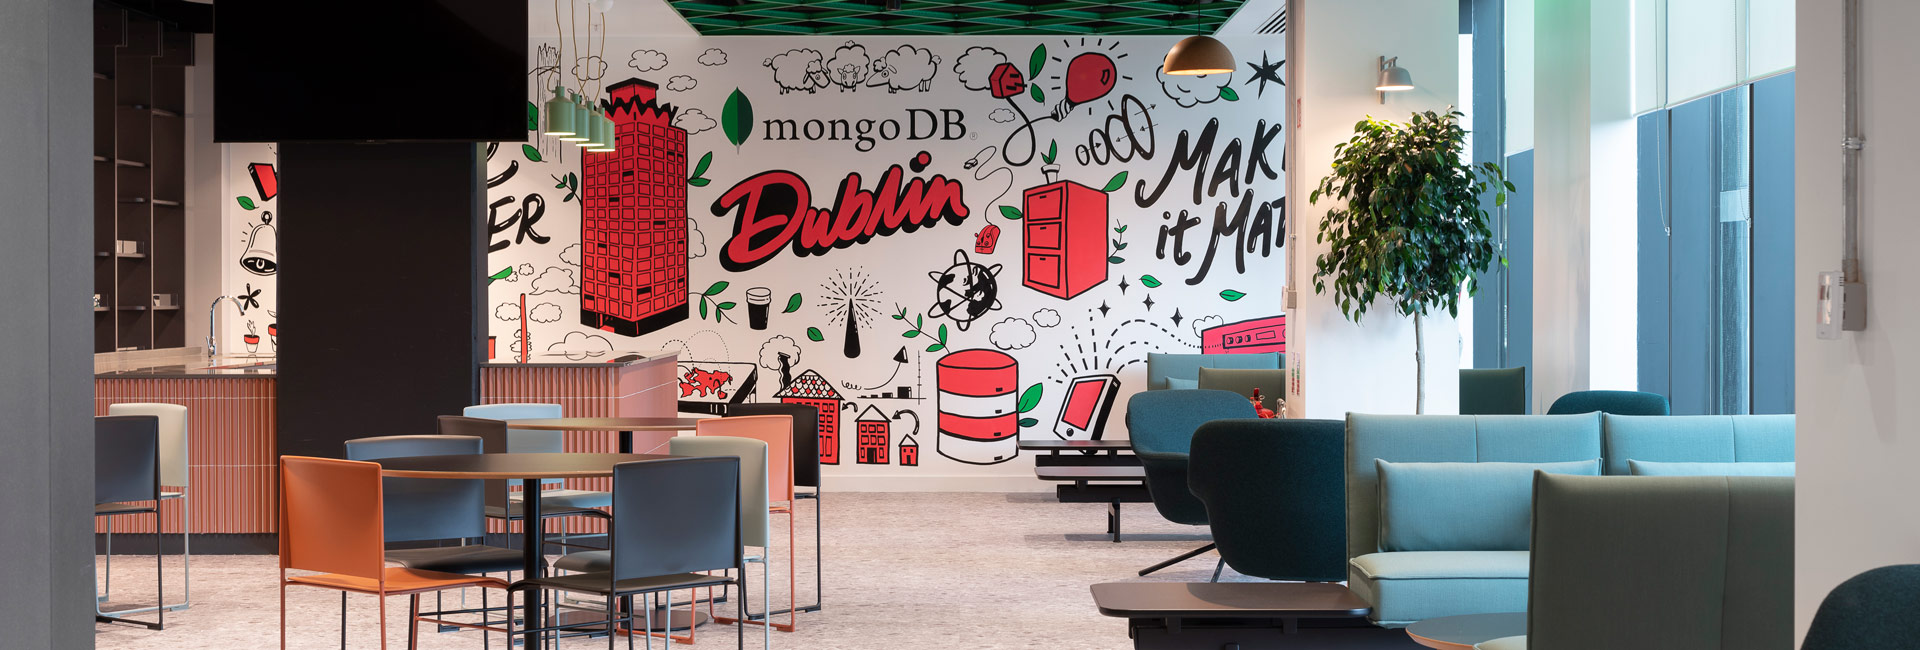 MongoDB Dublin